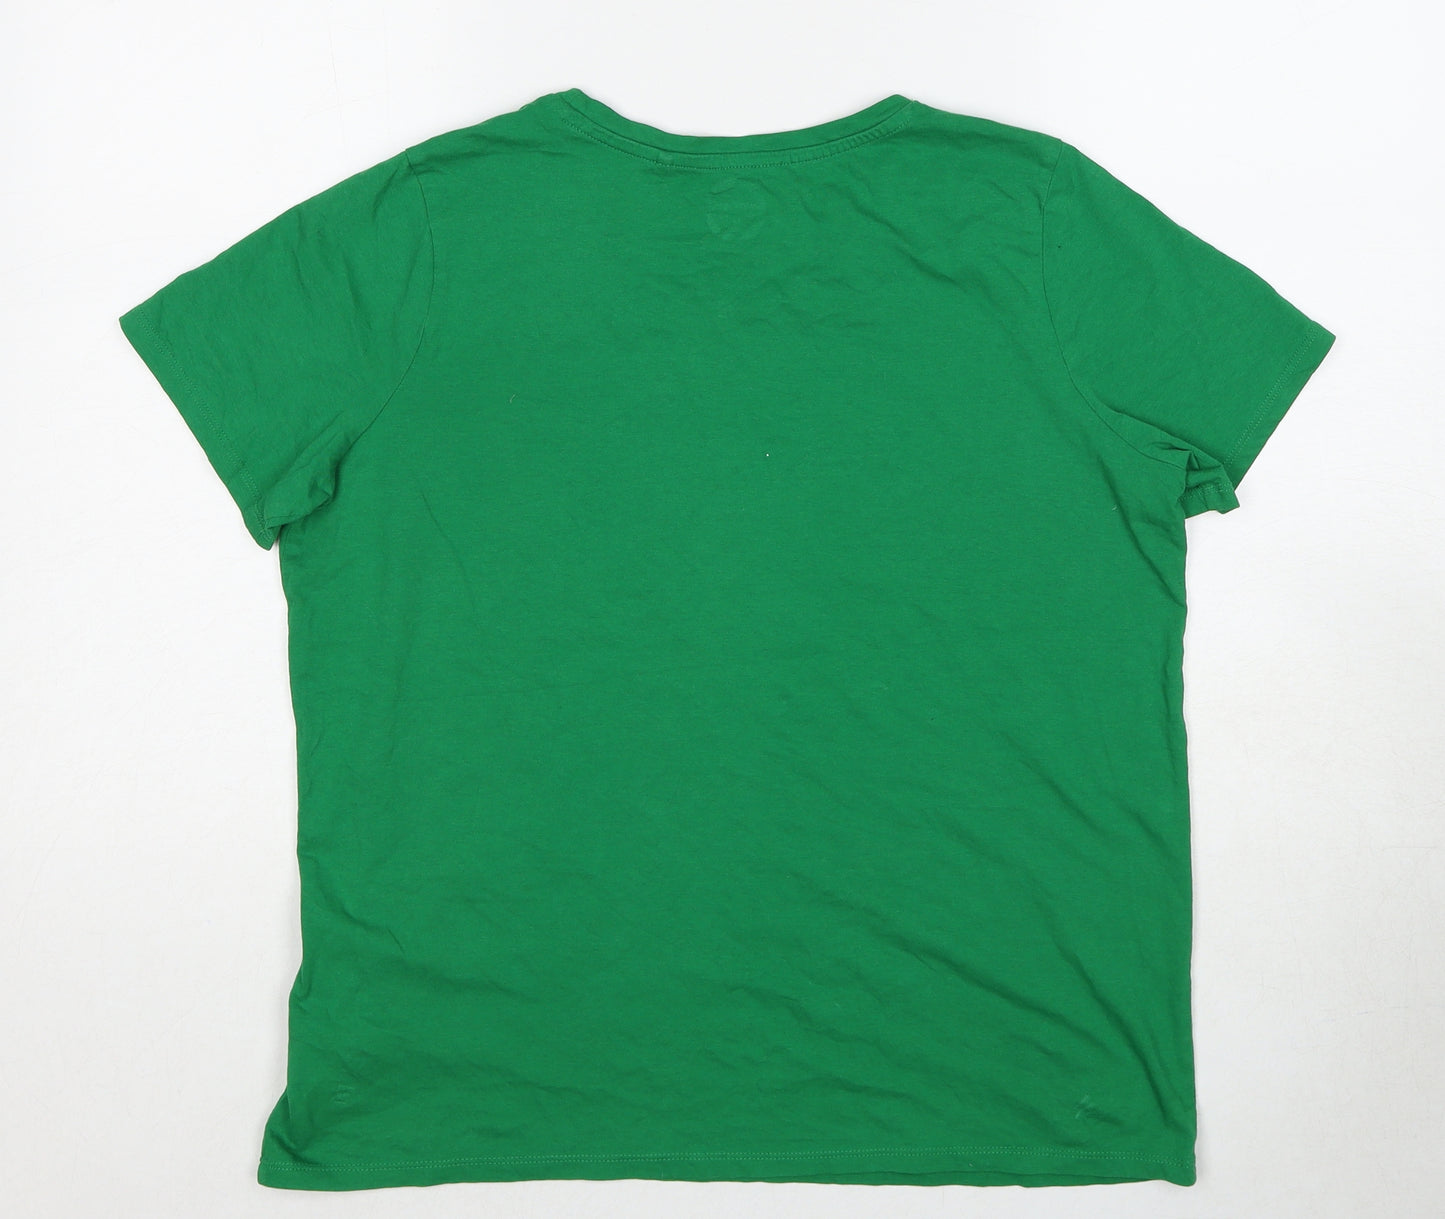 NEXT Womens Green Cotton Basic T-Shirt Size 14 Round Neck